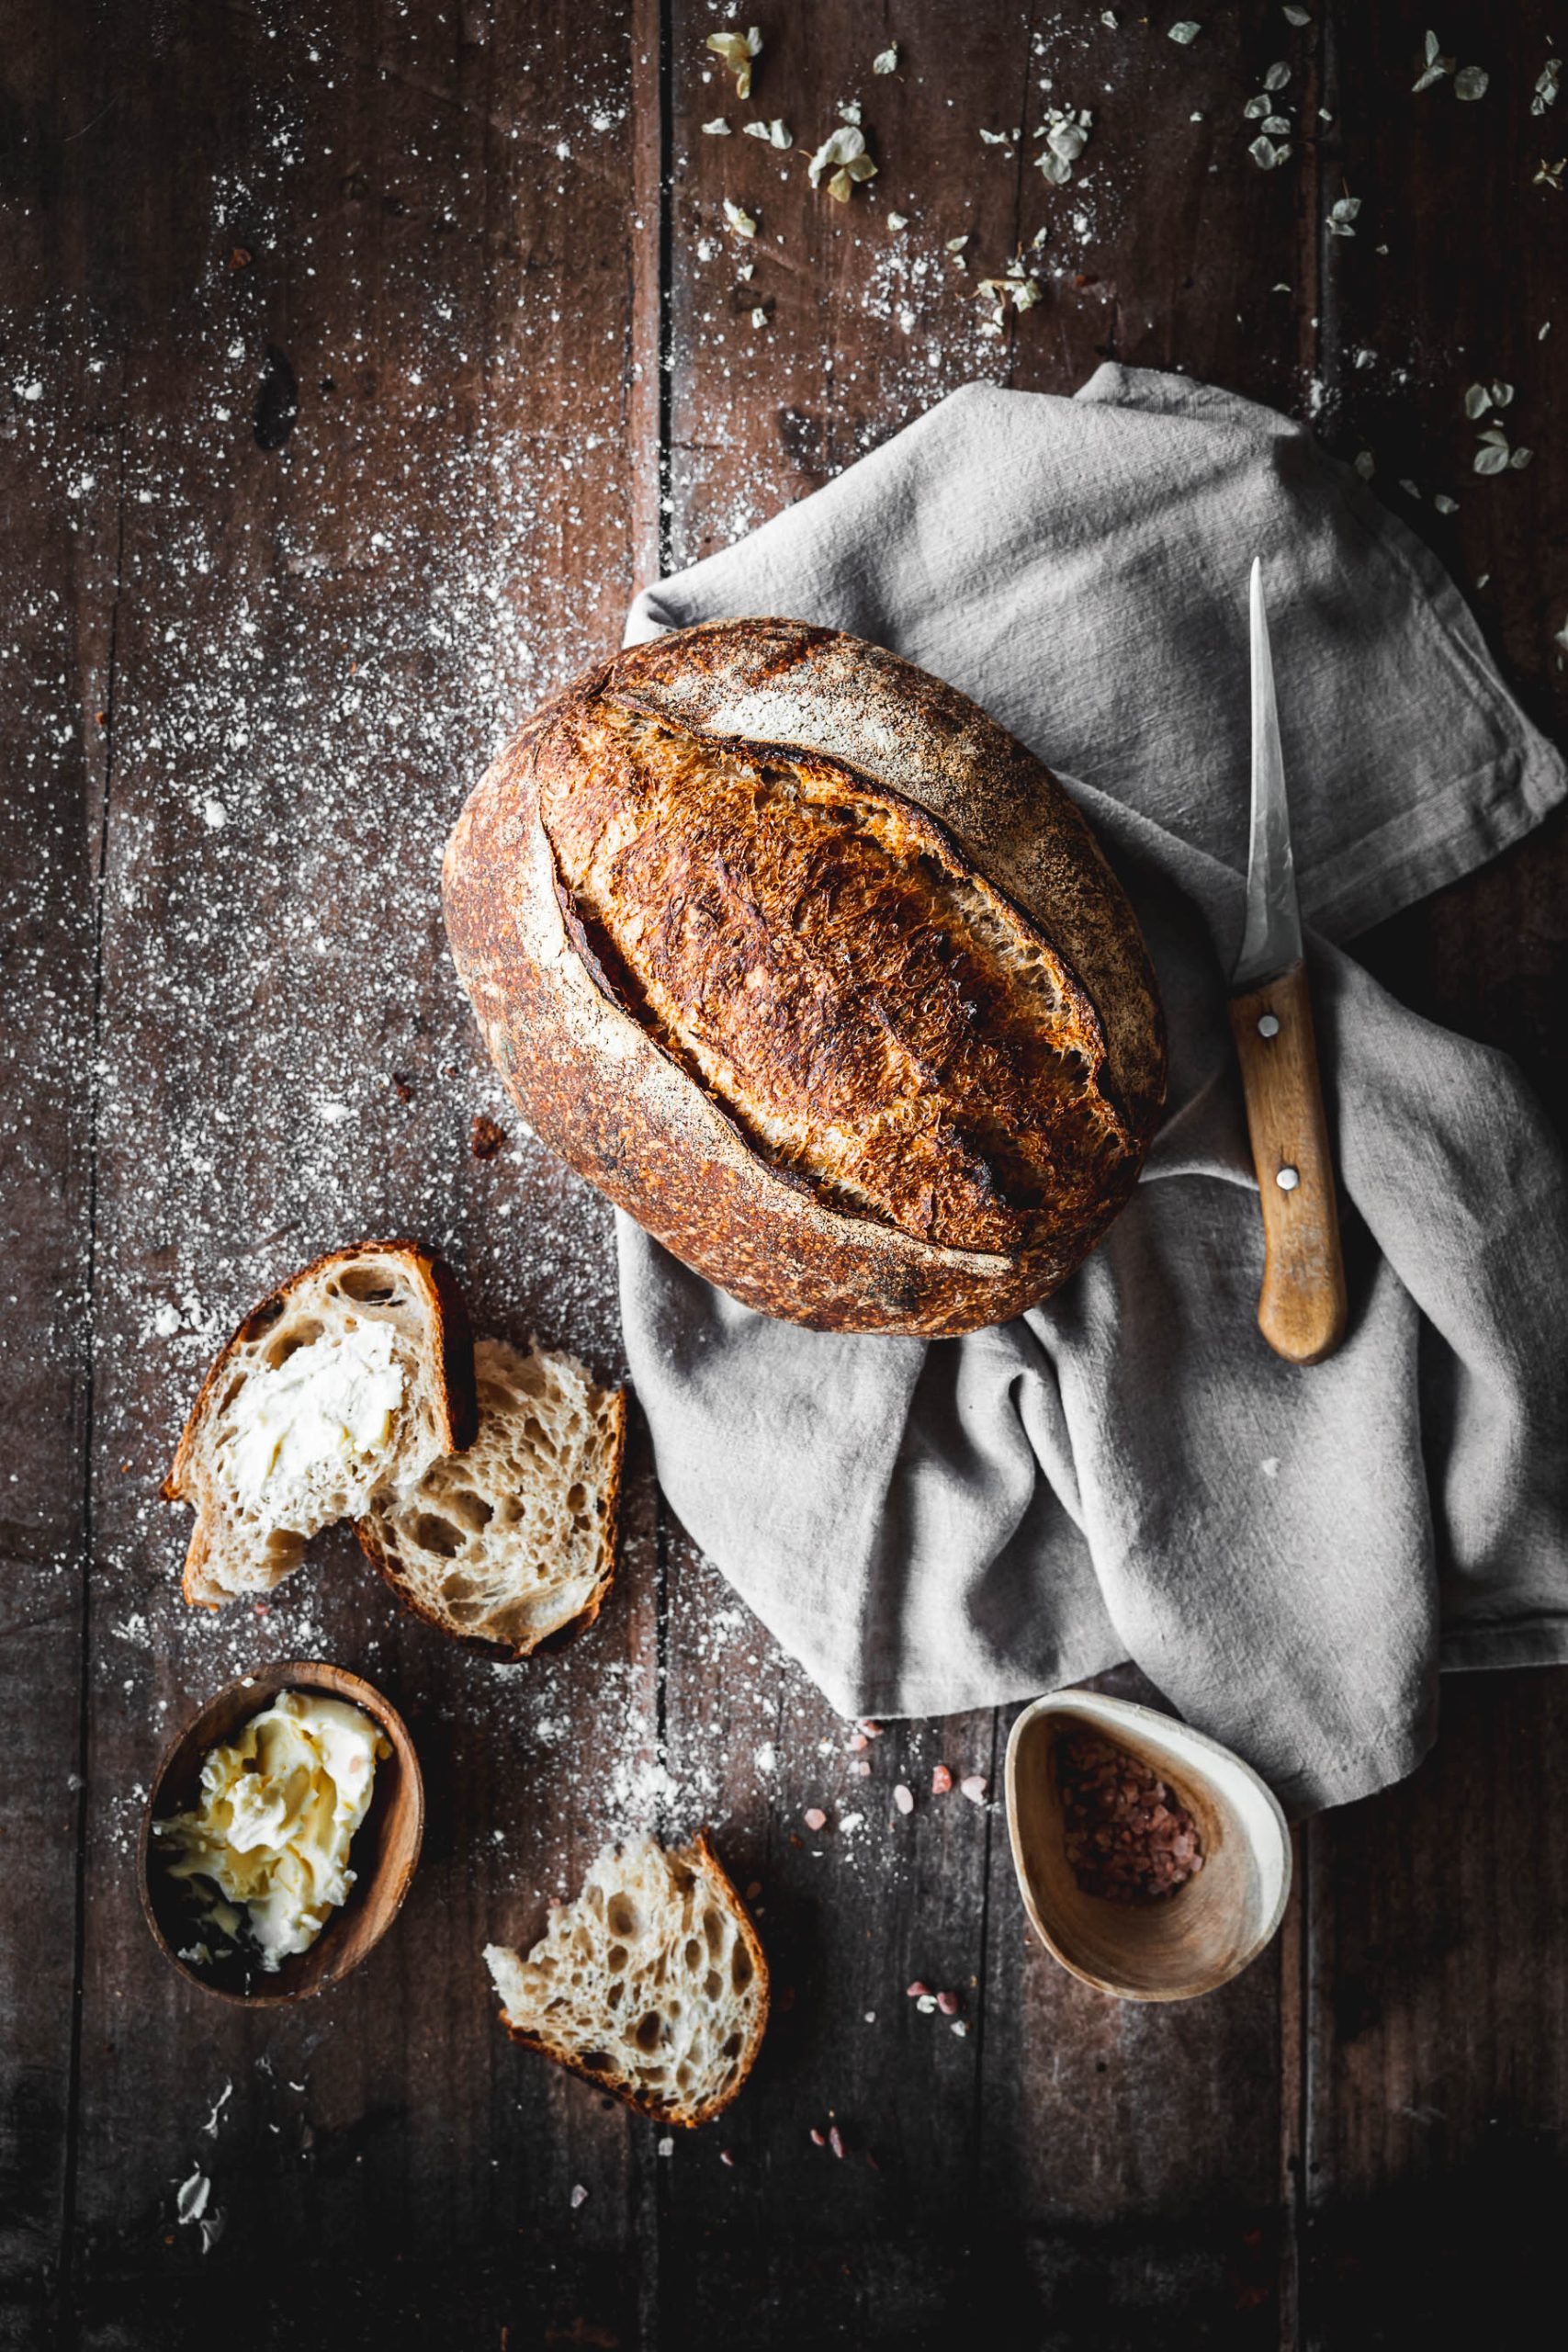 Sourdough bread food photography by Zuzana Rainet from Bratislava Slovakia